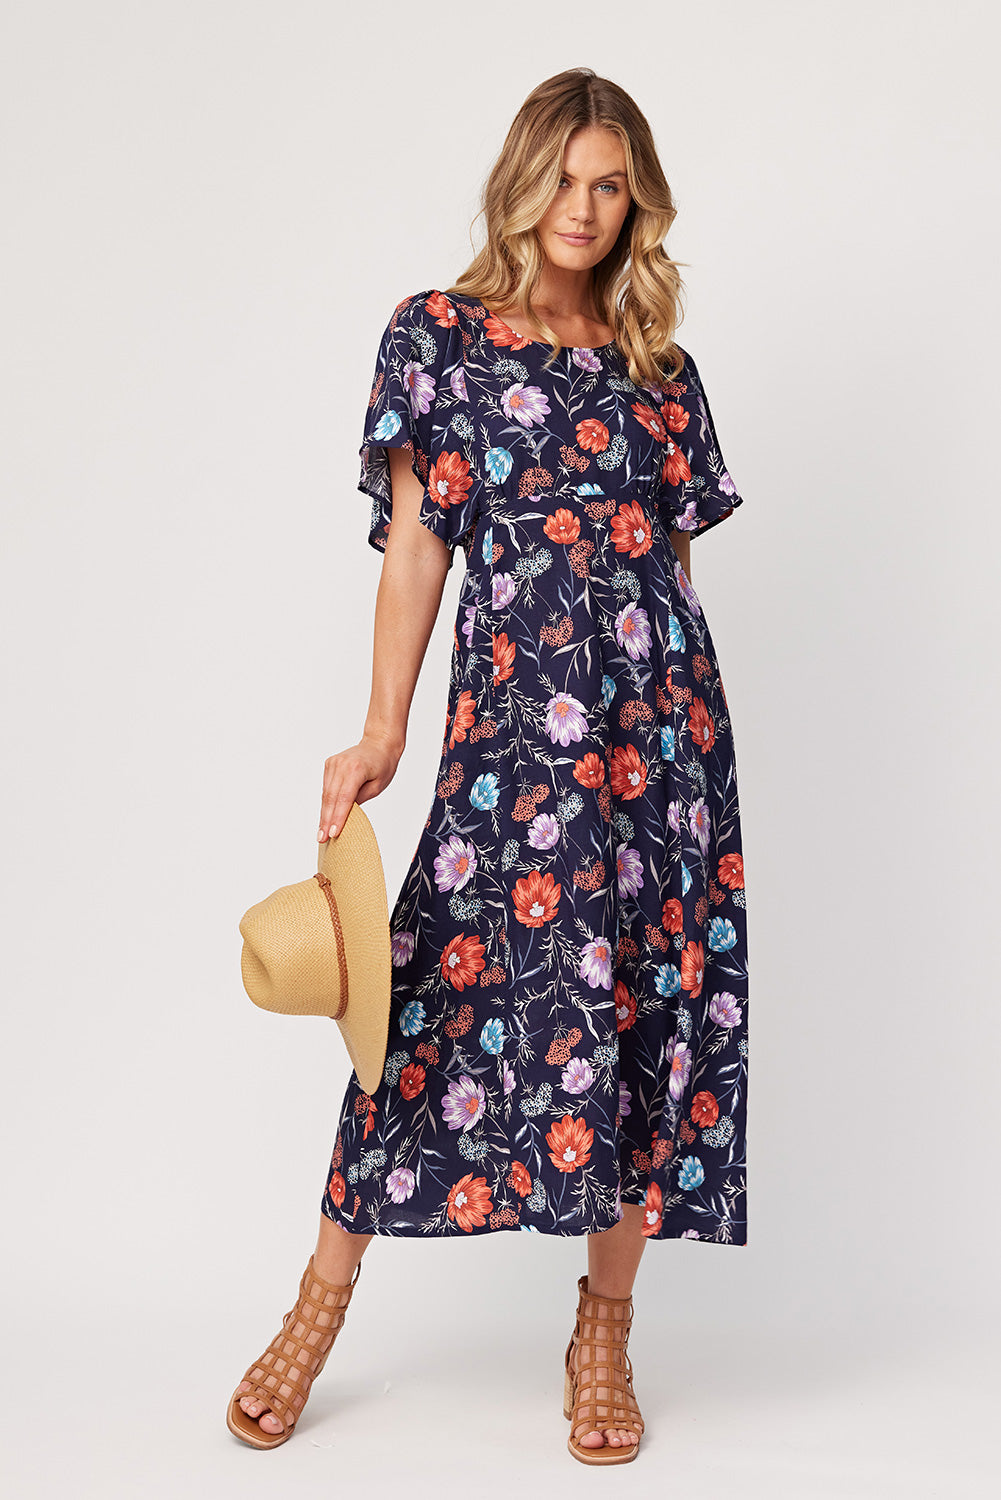 Lemon Tree - Mavis Dress - LT740 - Navy Floral - 50% Off 1x size 20 left